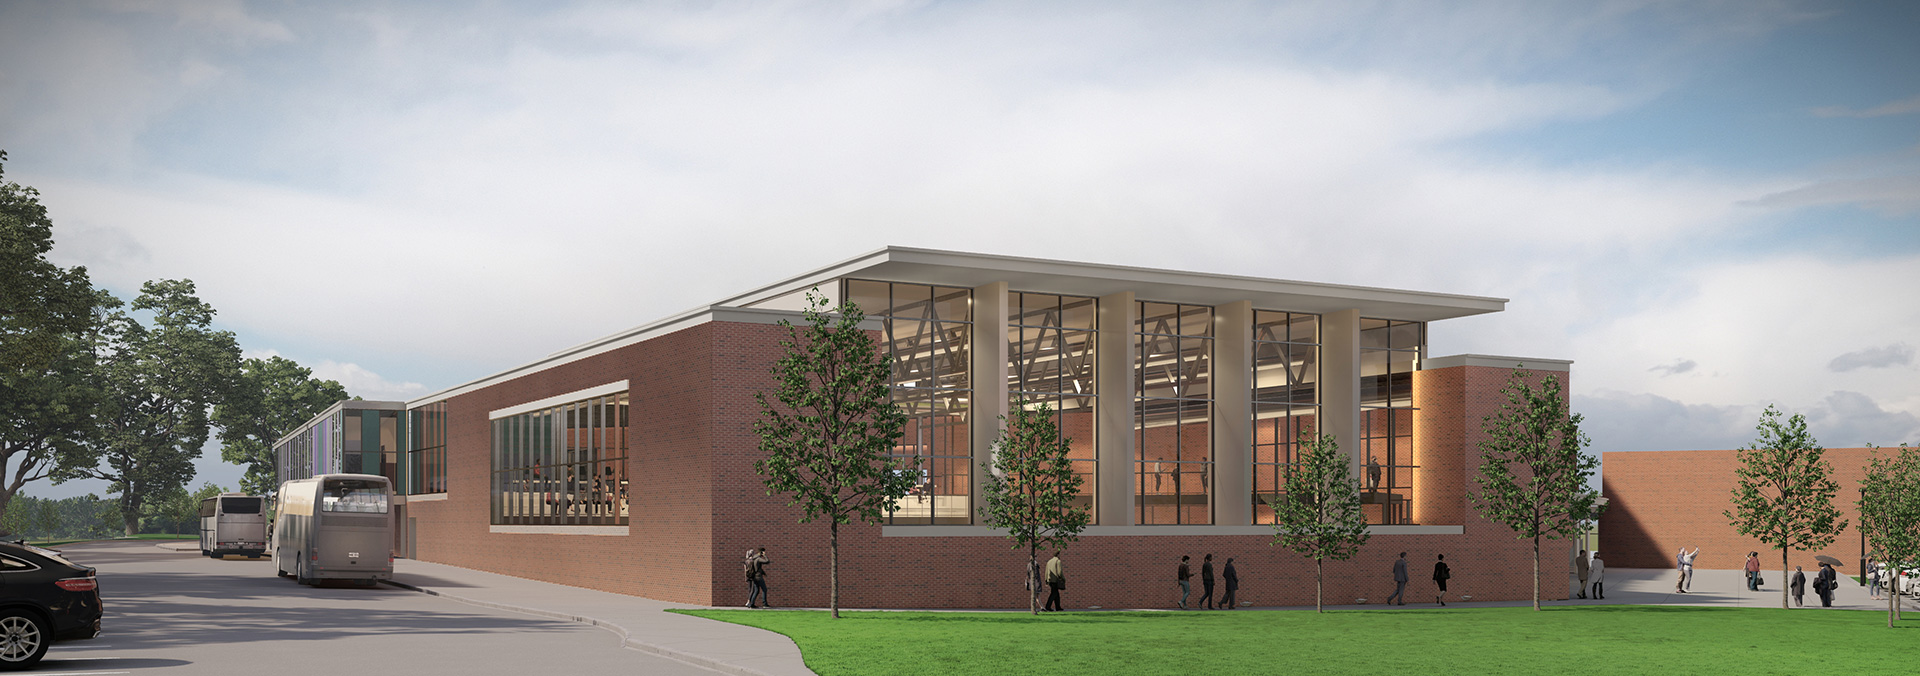 Boston College High School Natatorium and Wellness Center | Campus Architecture